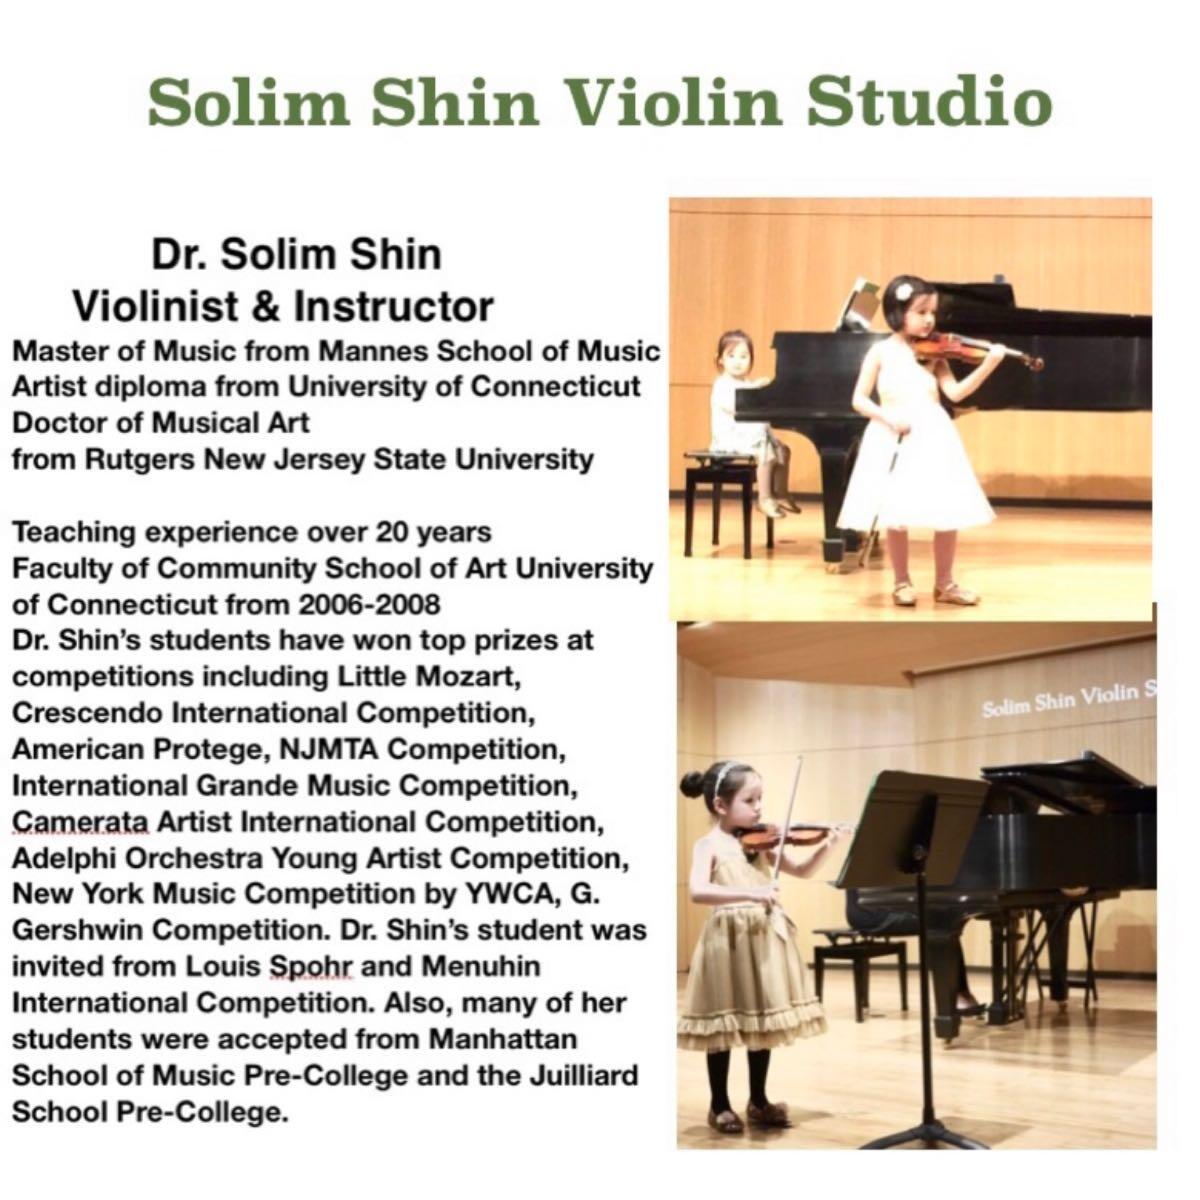 Dr. Solim Shin Violin Studio - Irvine, CA - Nextdoor